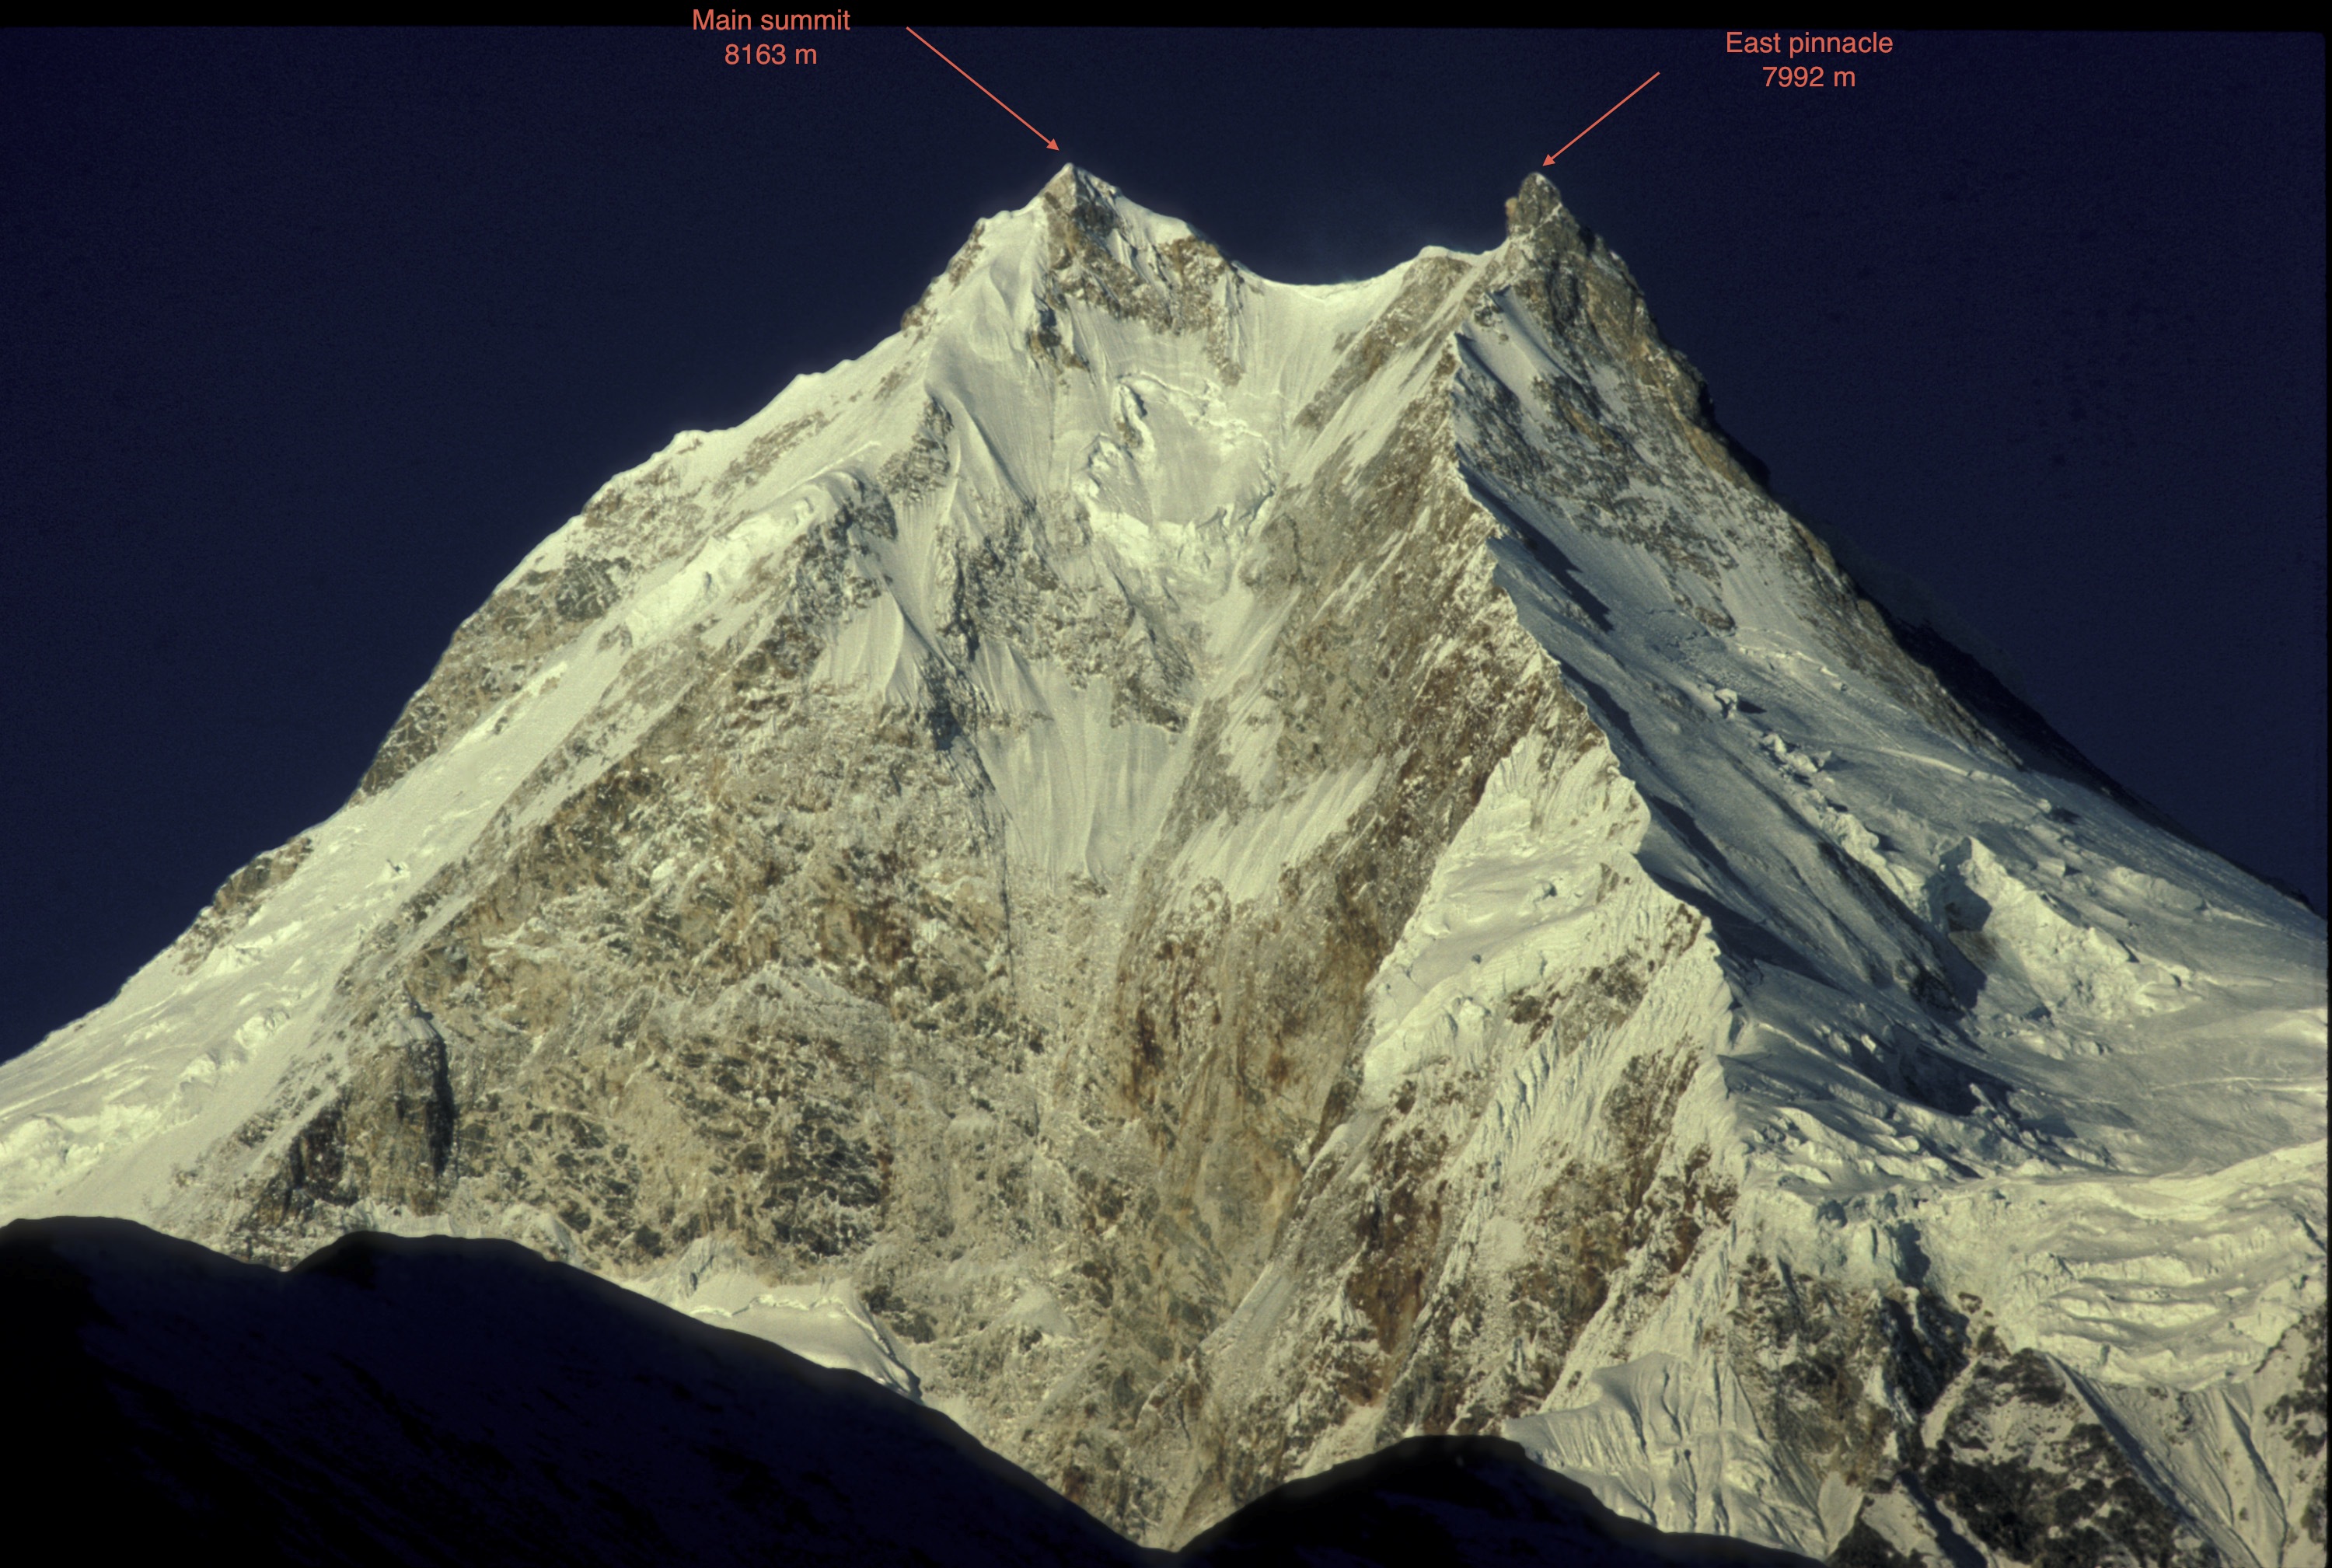 Восточная вершина Манаслу (East Pinnacle  / 7992 м) и Главная вершина Манаслу (Main Summit / 8163 м)